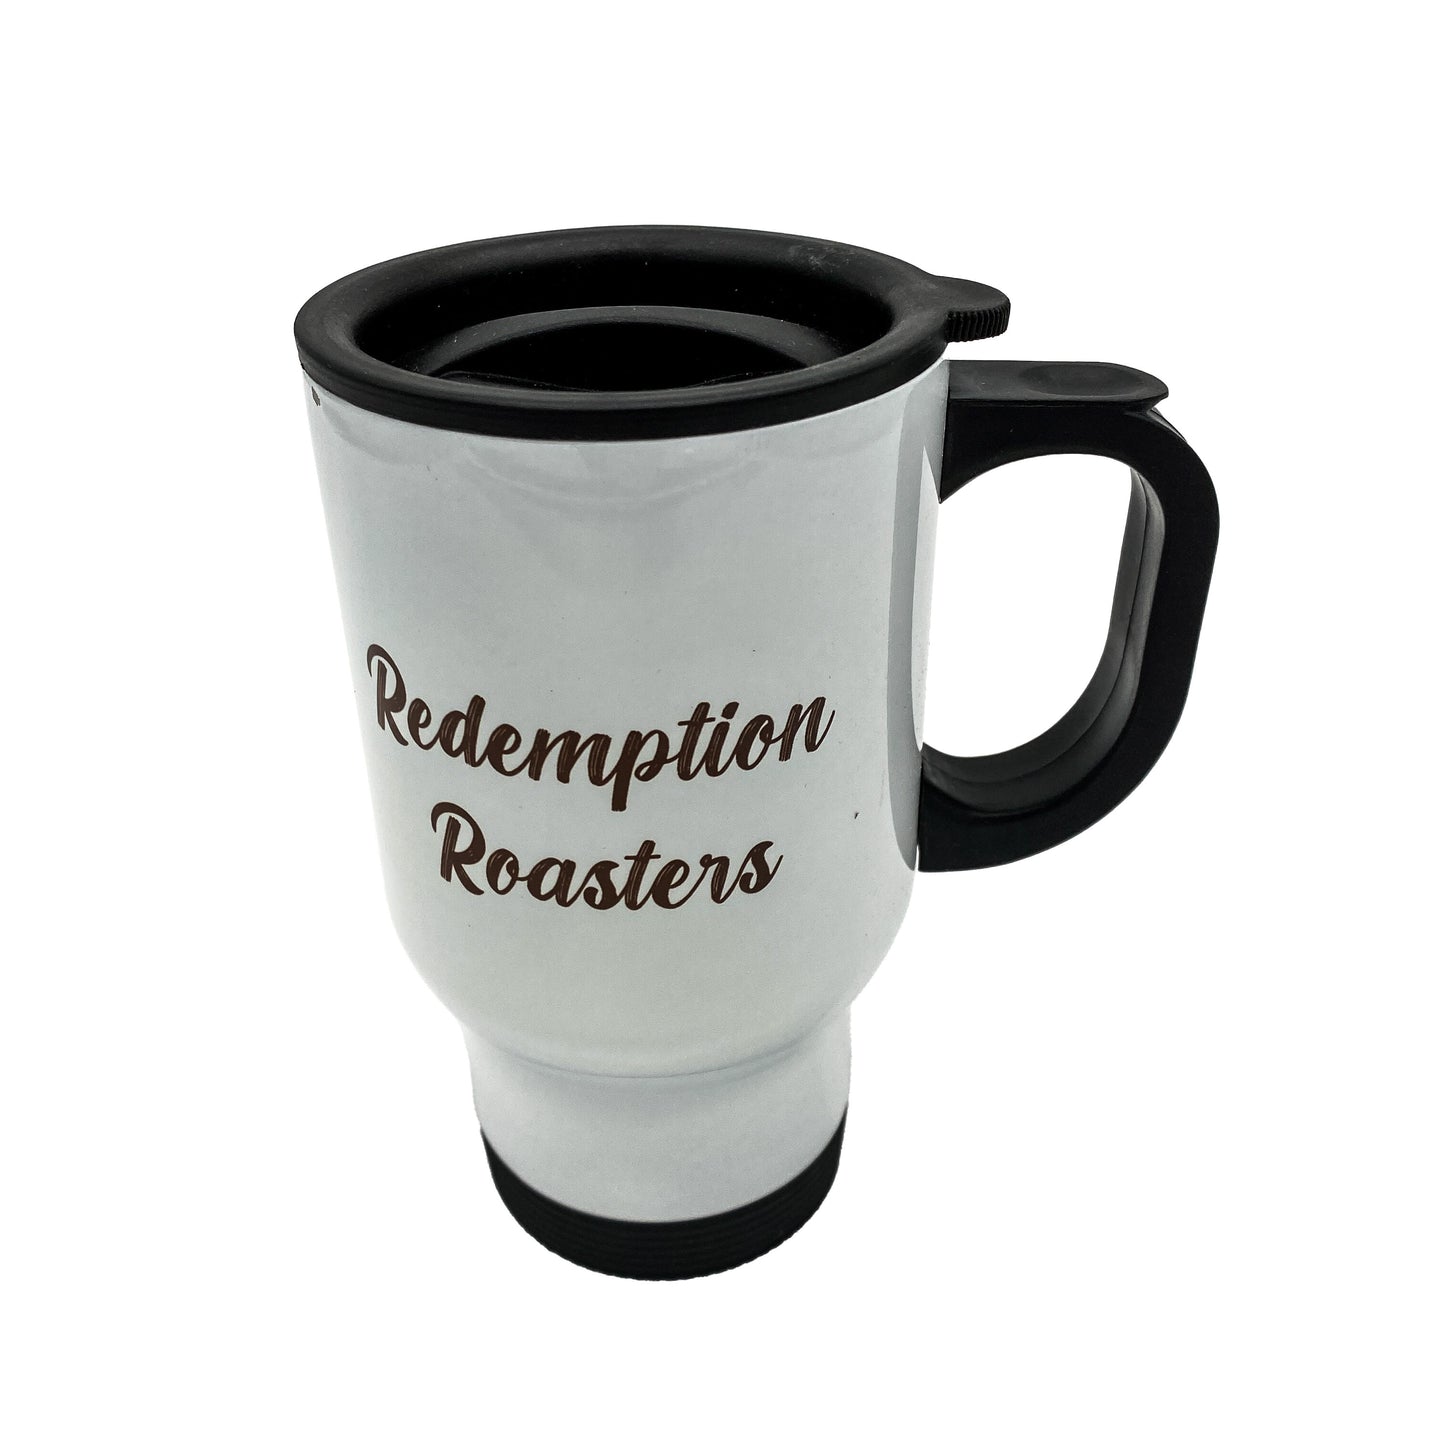 Travel mug with redemption roaster logo